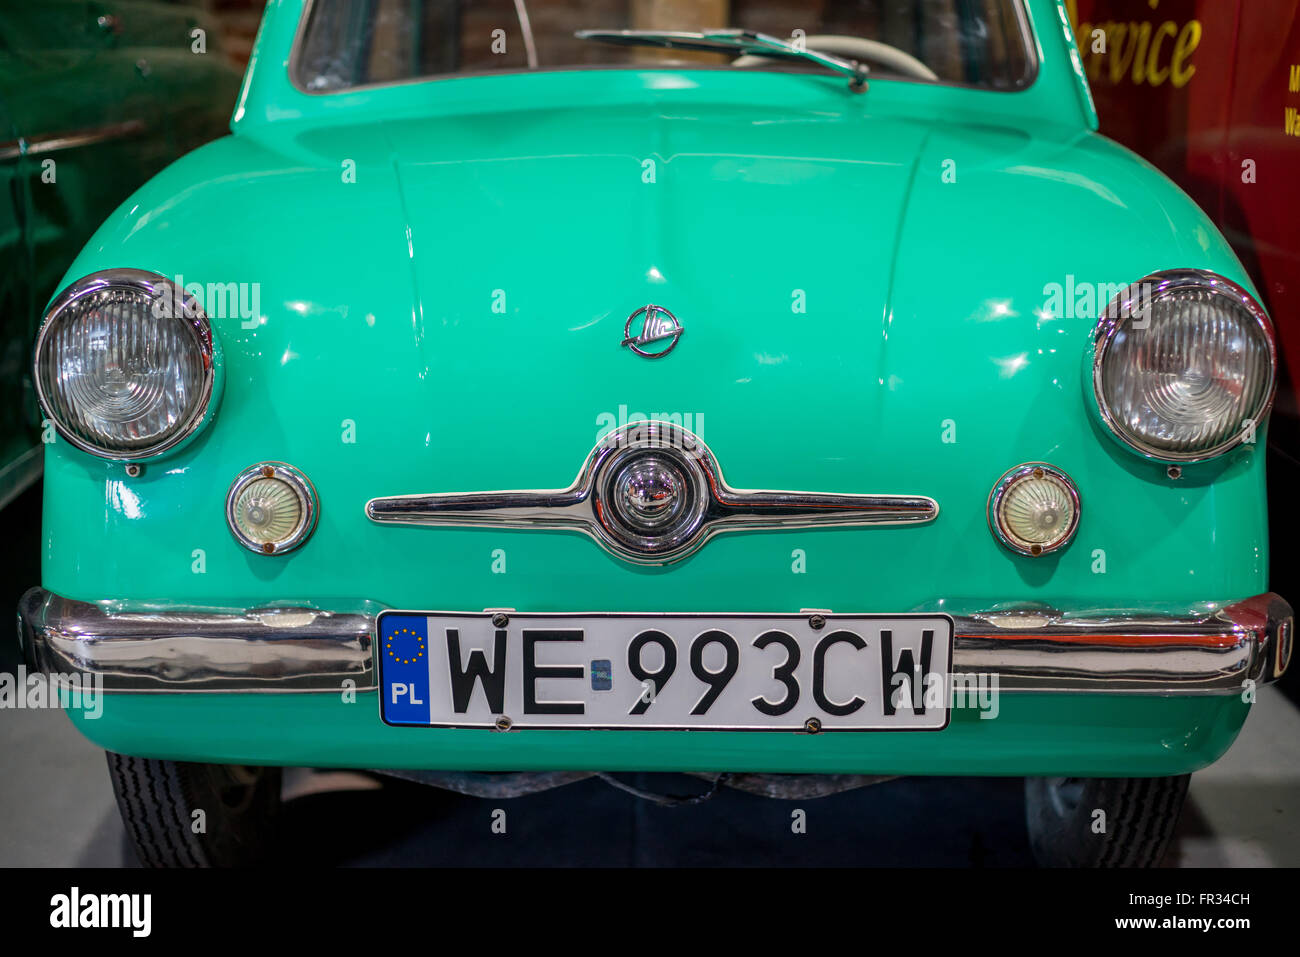 Mikrus RB 300 Vintage Polish micro coche desde 1959 Topacz Car Museum Foto de stock